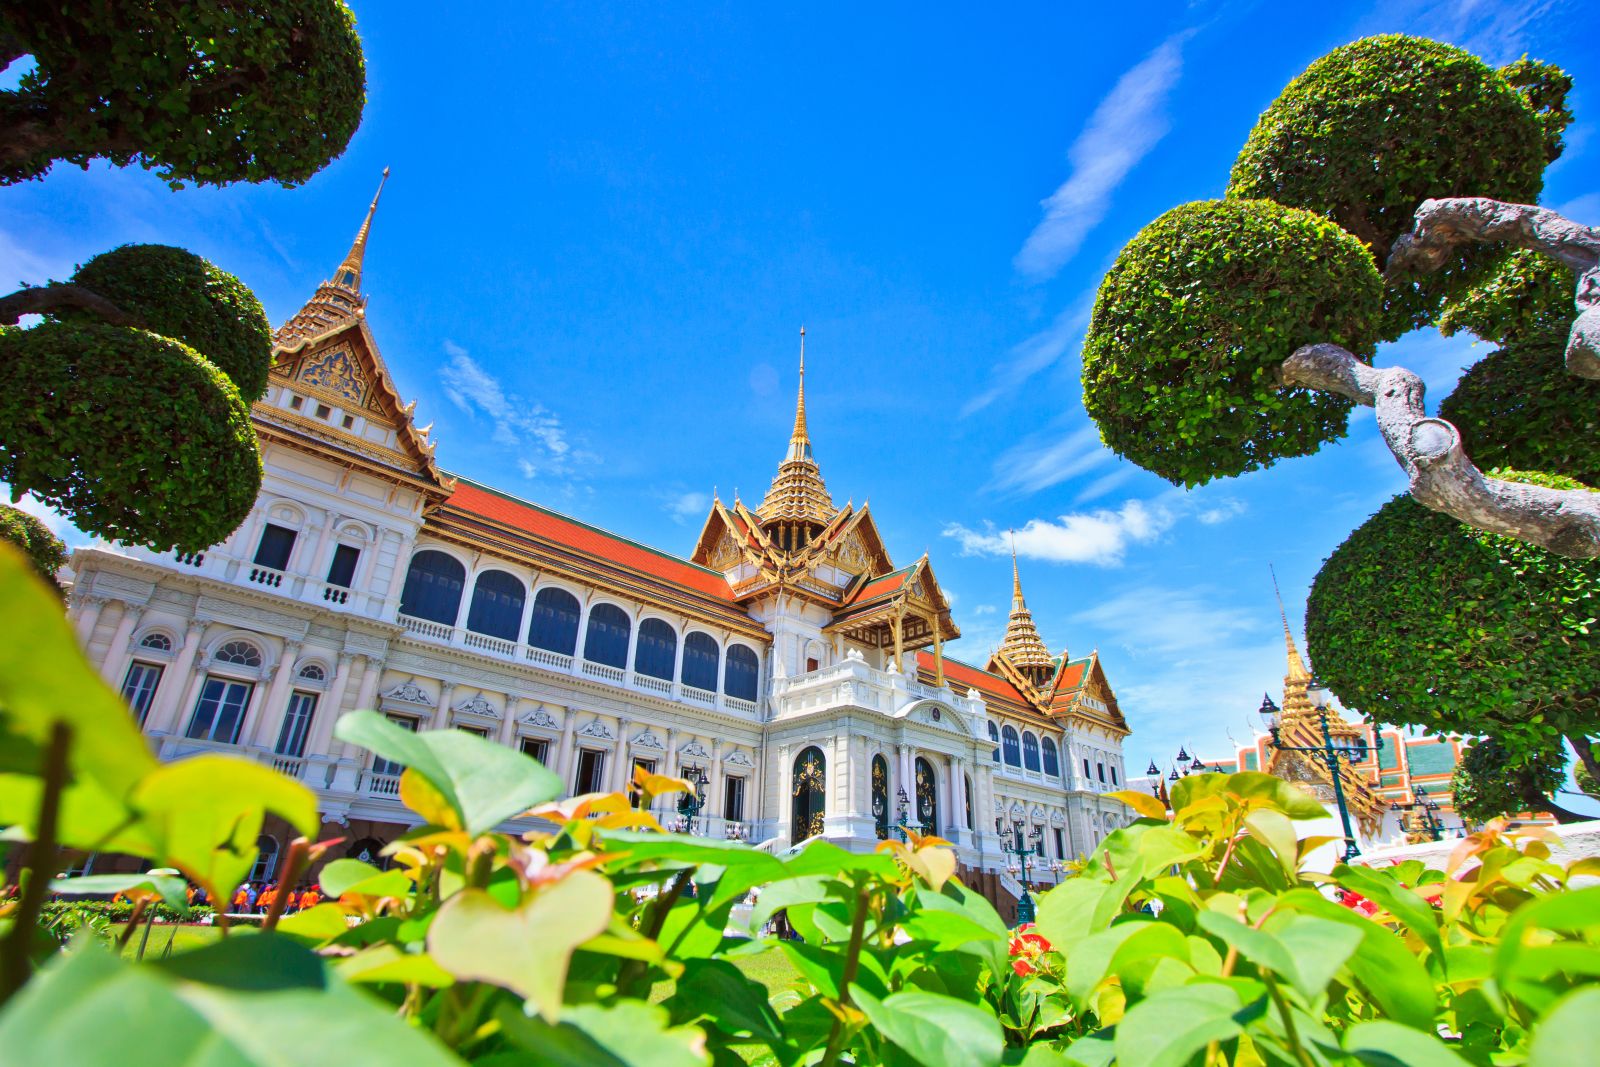 The gardens surrounding the Grand Palace in Bangkok Thailand